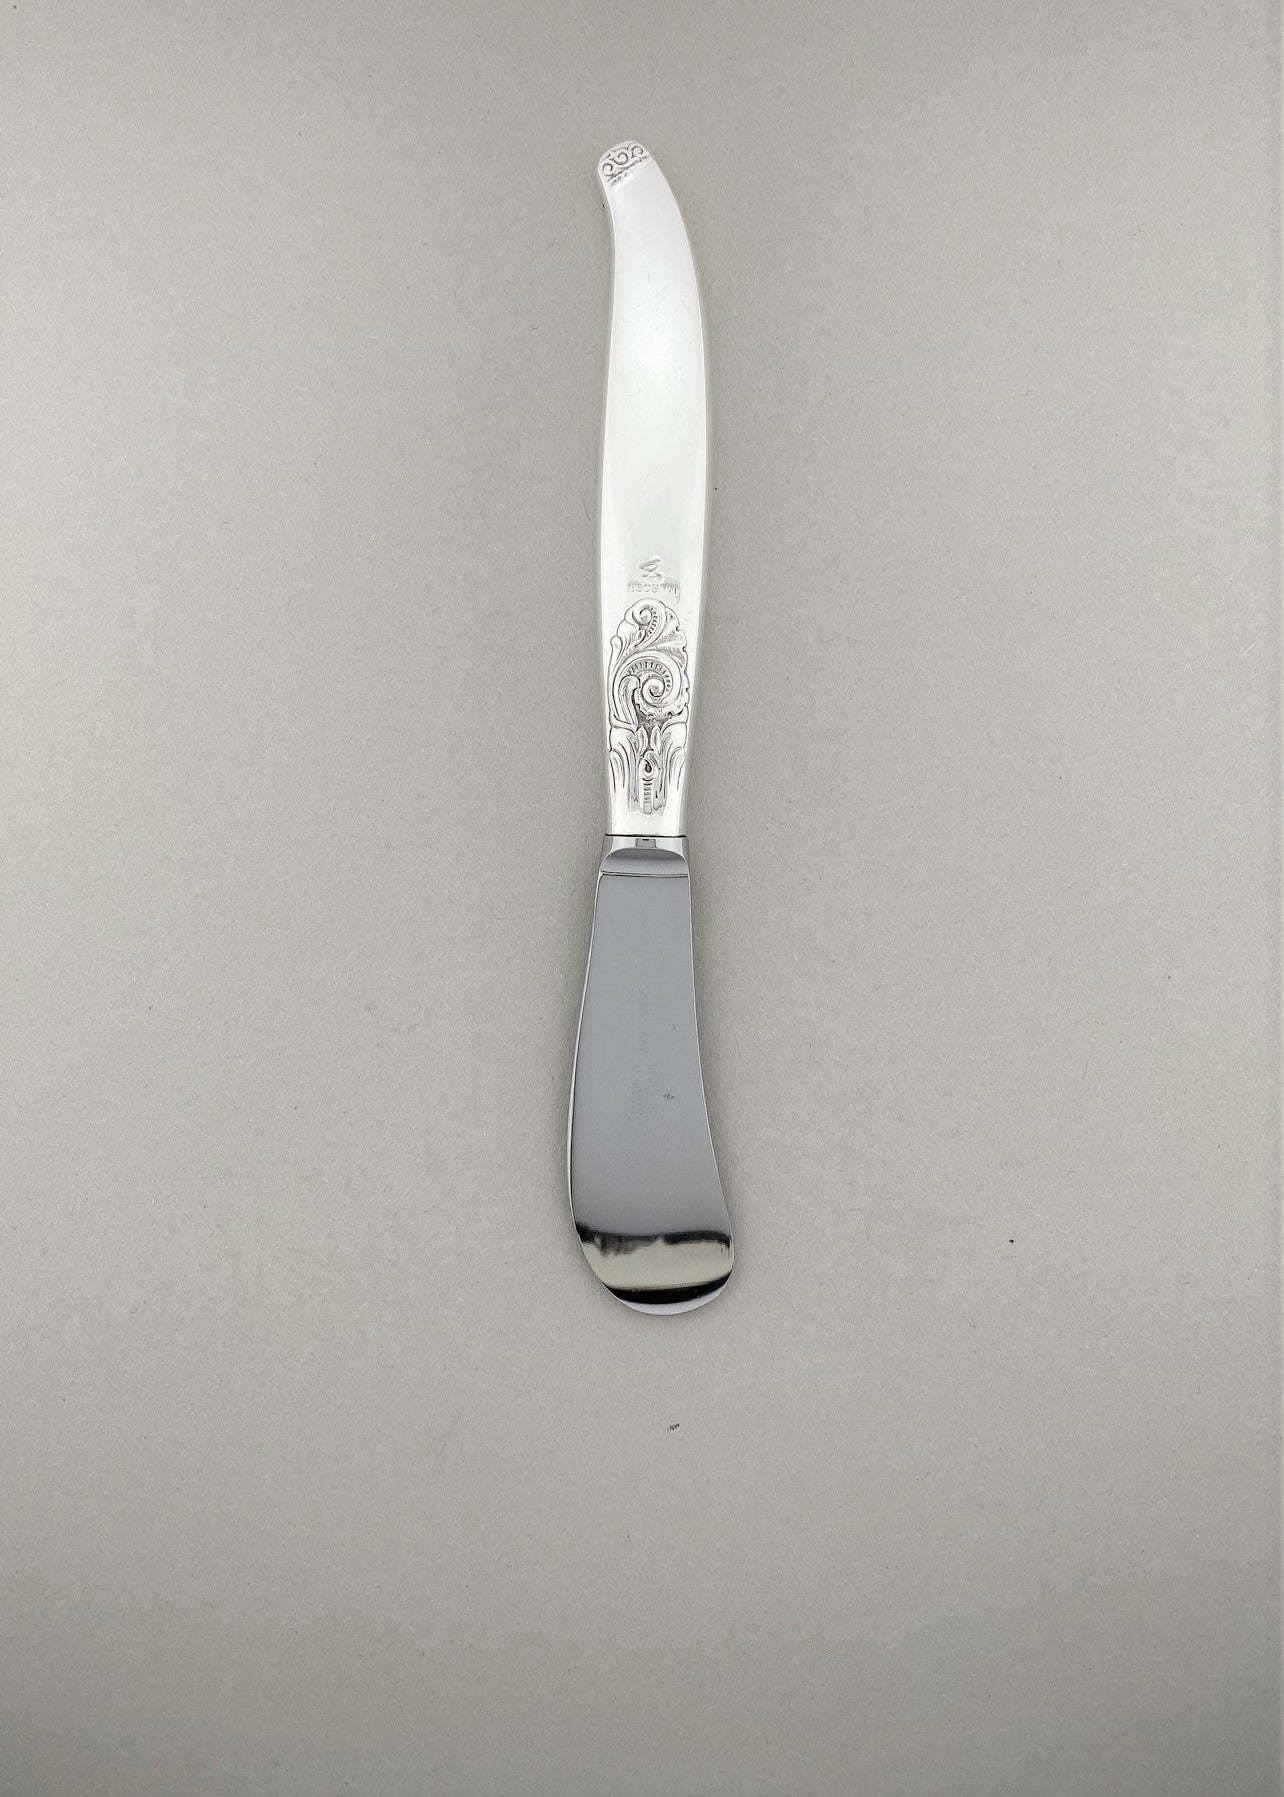 Vintage Telesilver butter knife